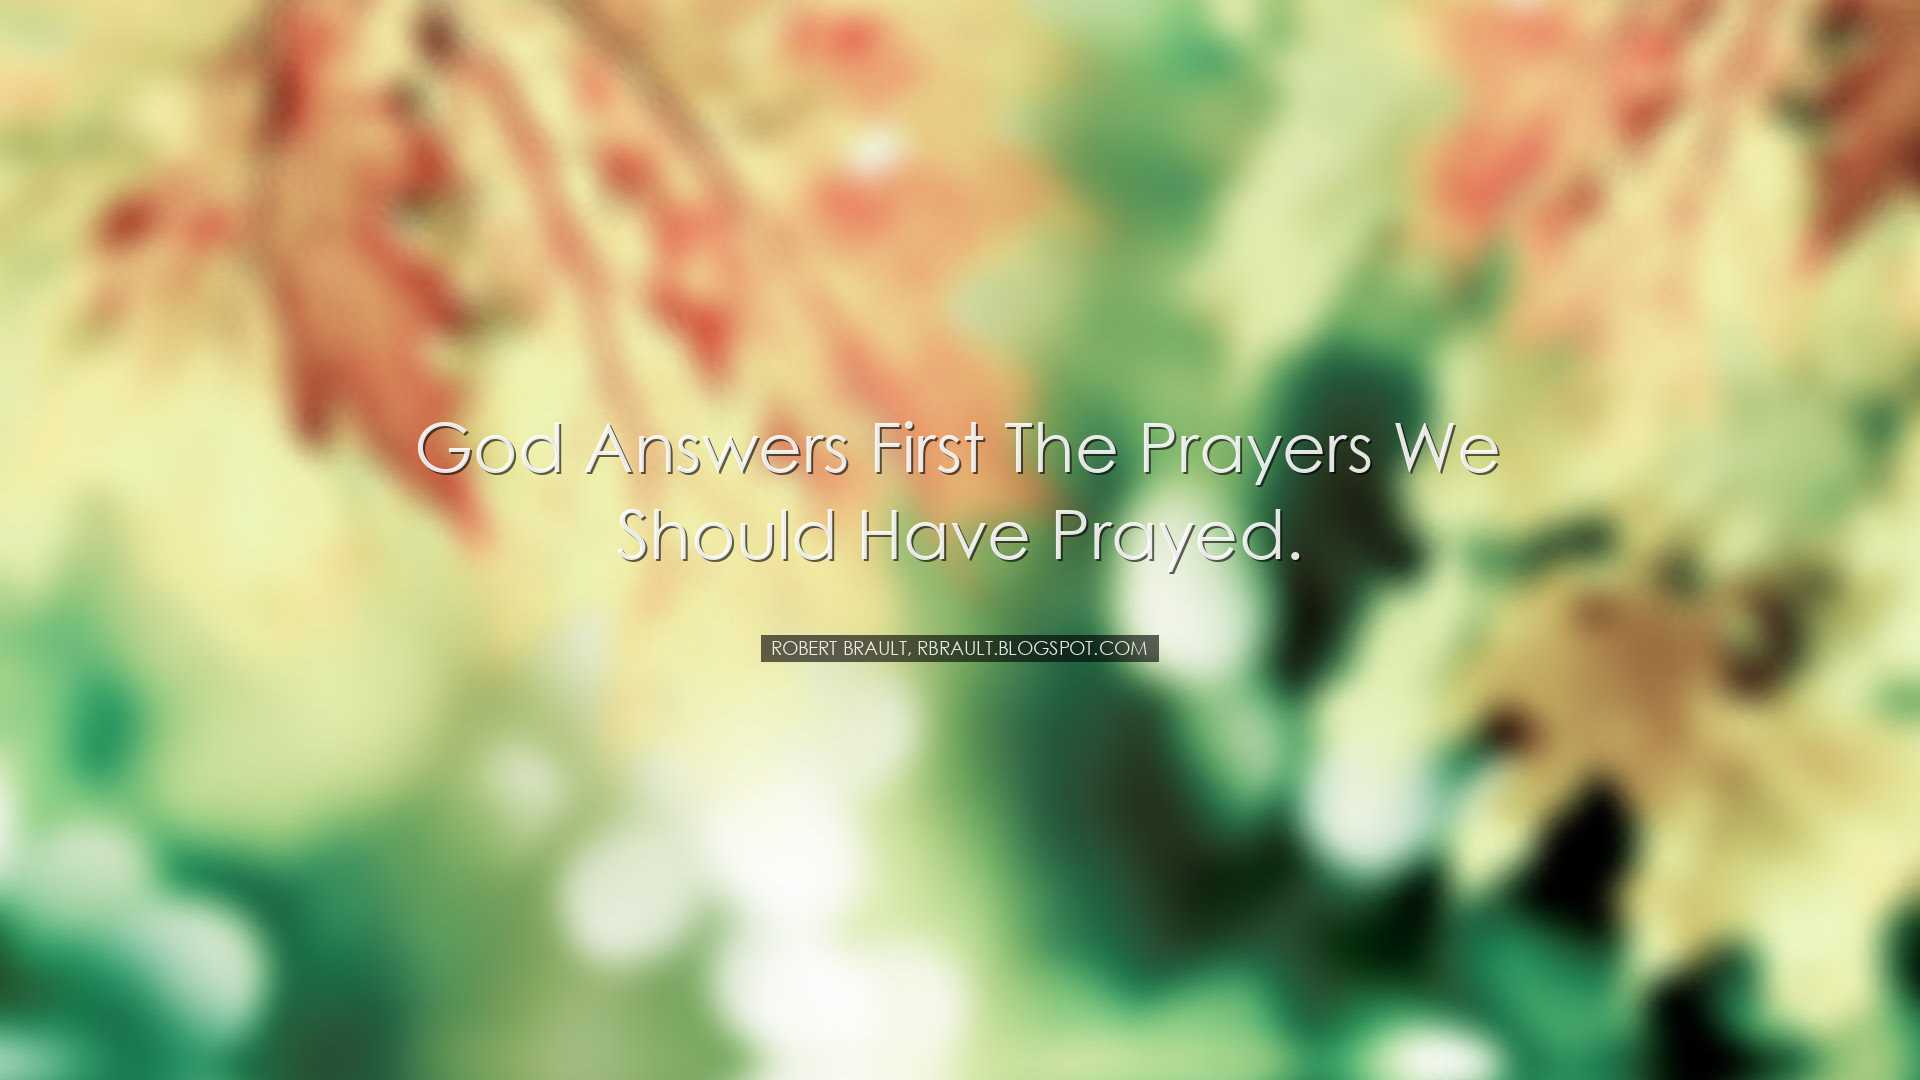 God answers first the prayers we should have prayed. - Robert Brau